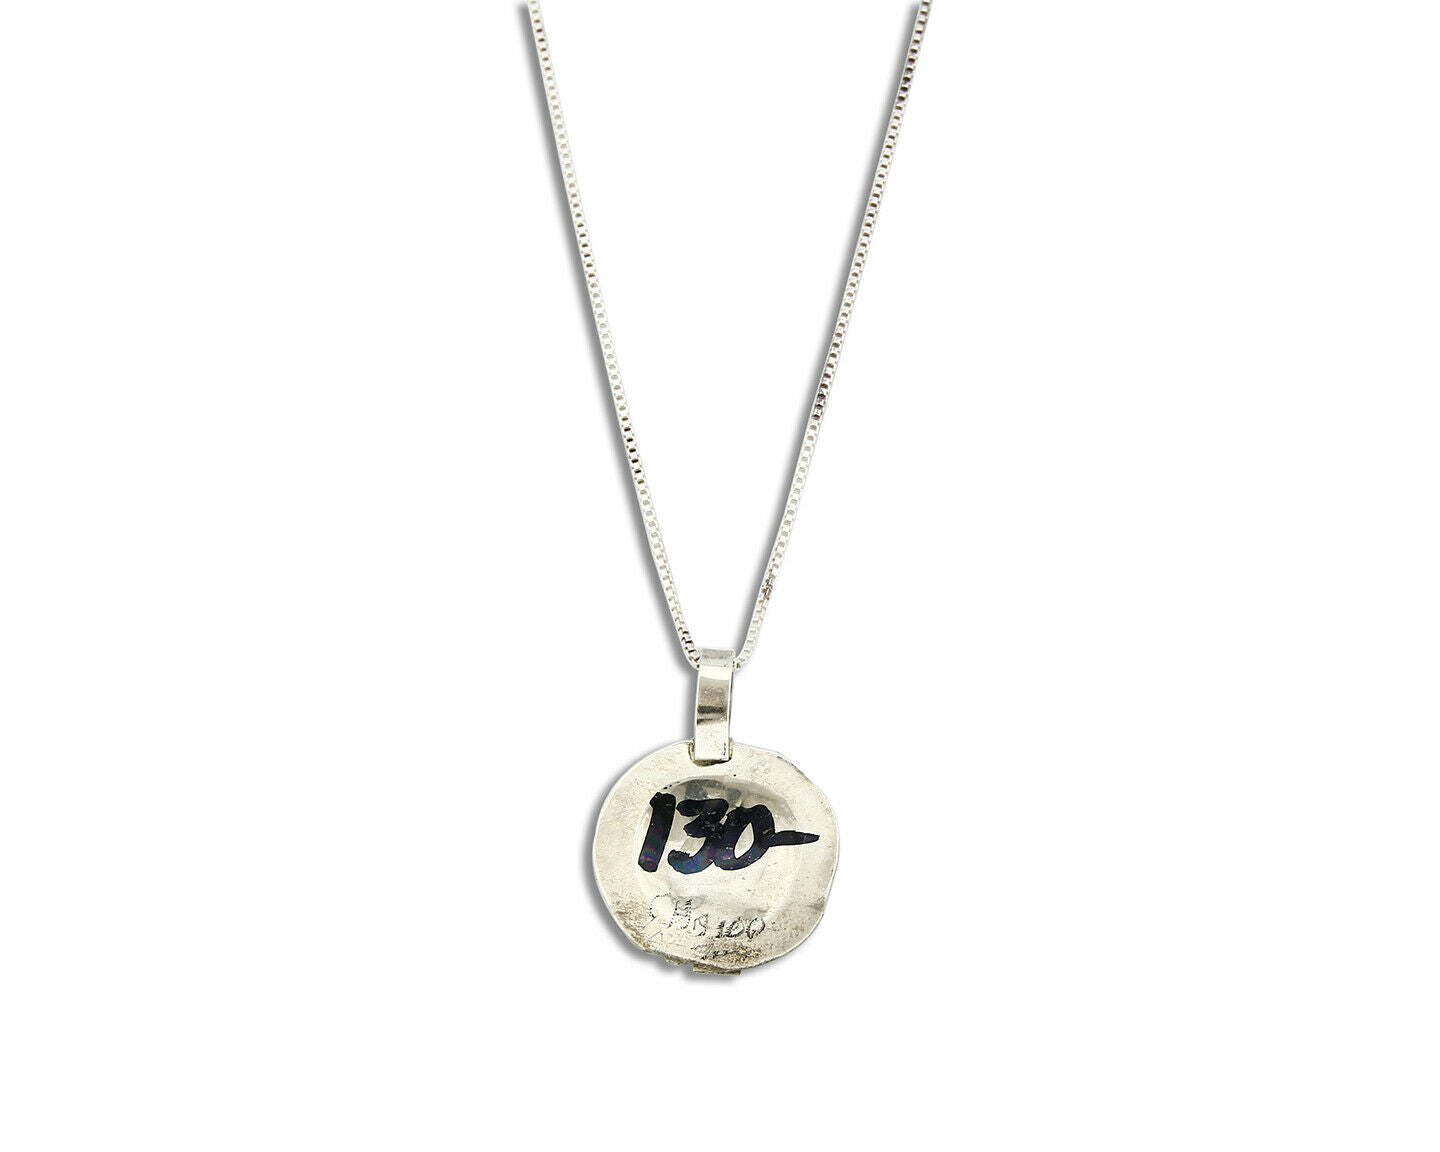 Women's Zuni Pendant .925 Silver Gemstone Handmade Signed Chaloo Necklace